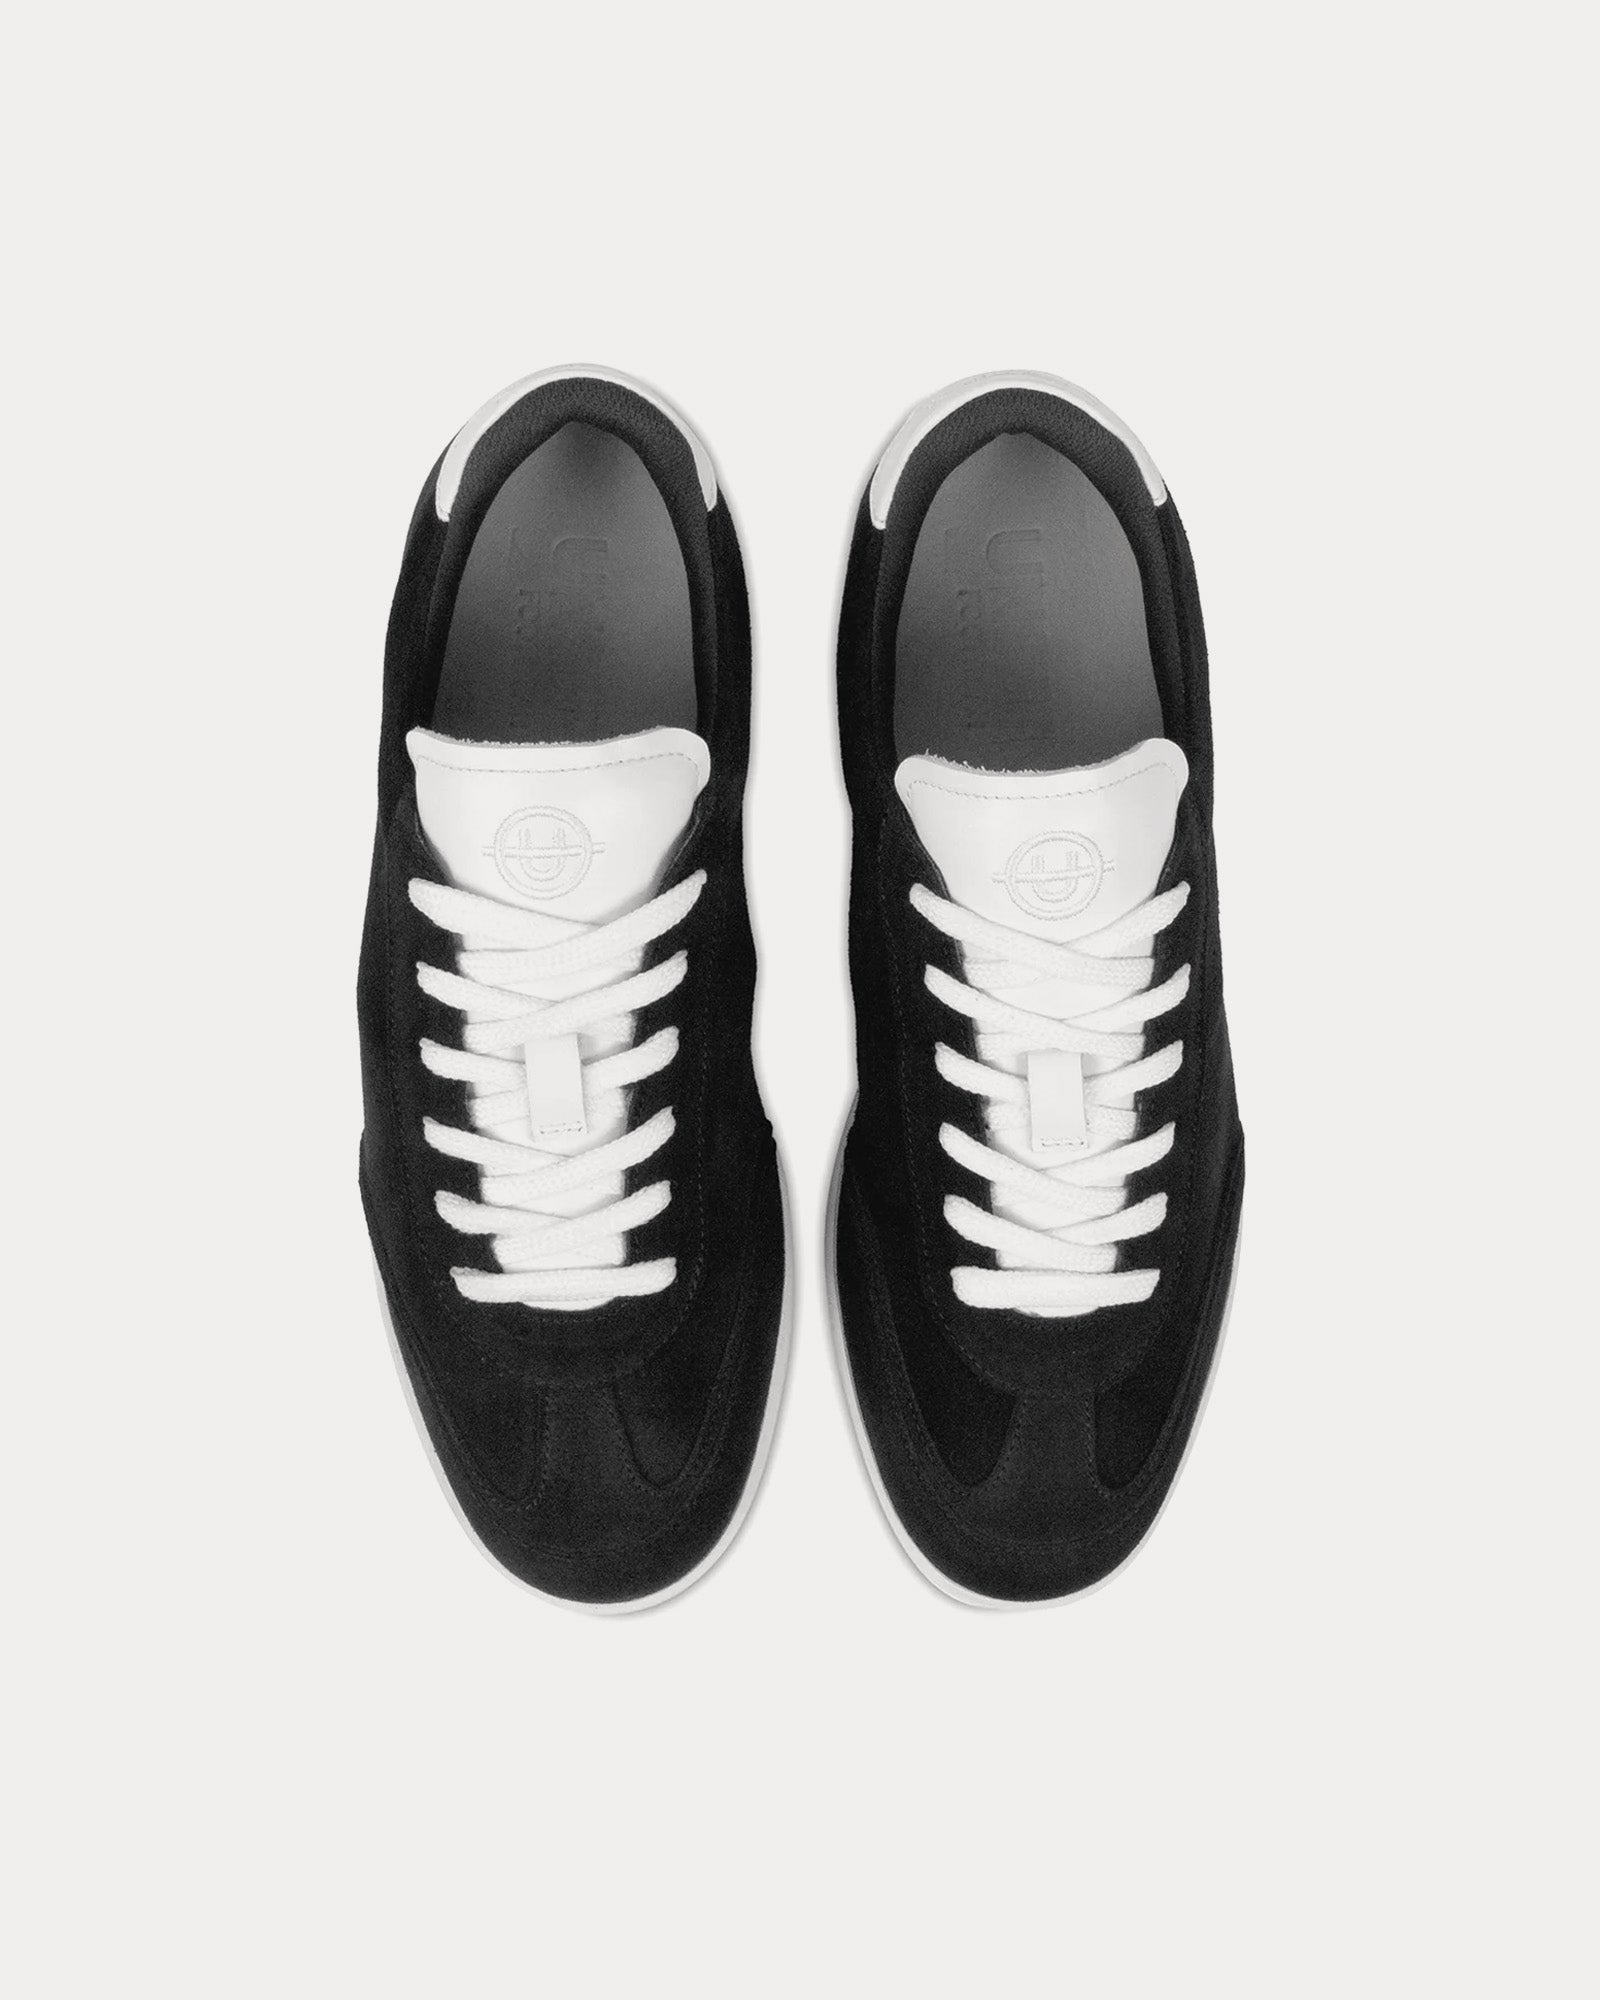 Unseen Footwear - Portelet Black Low Top Sneakers